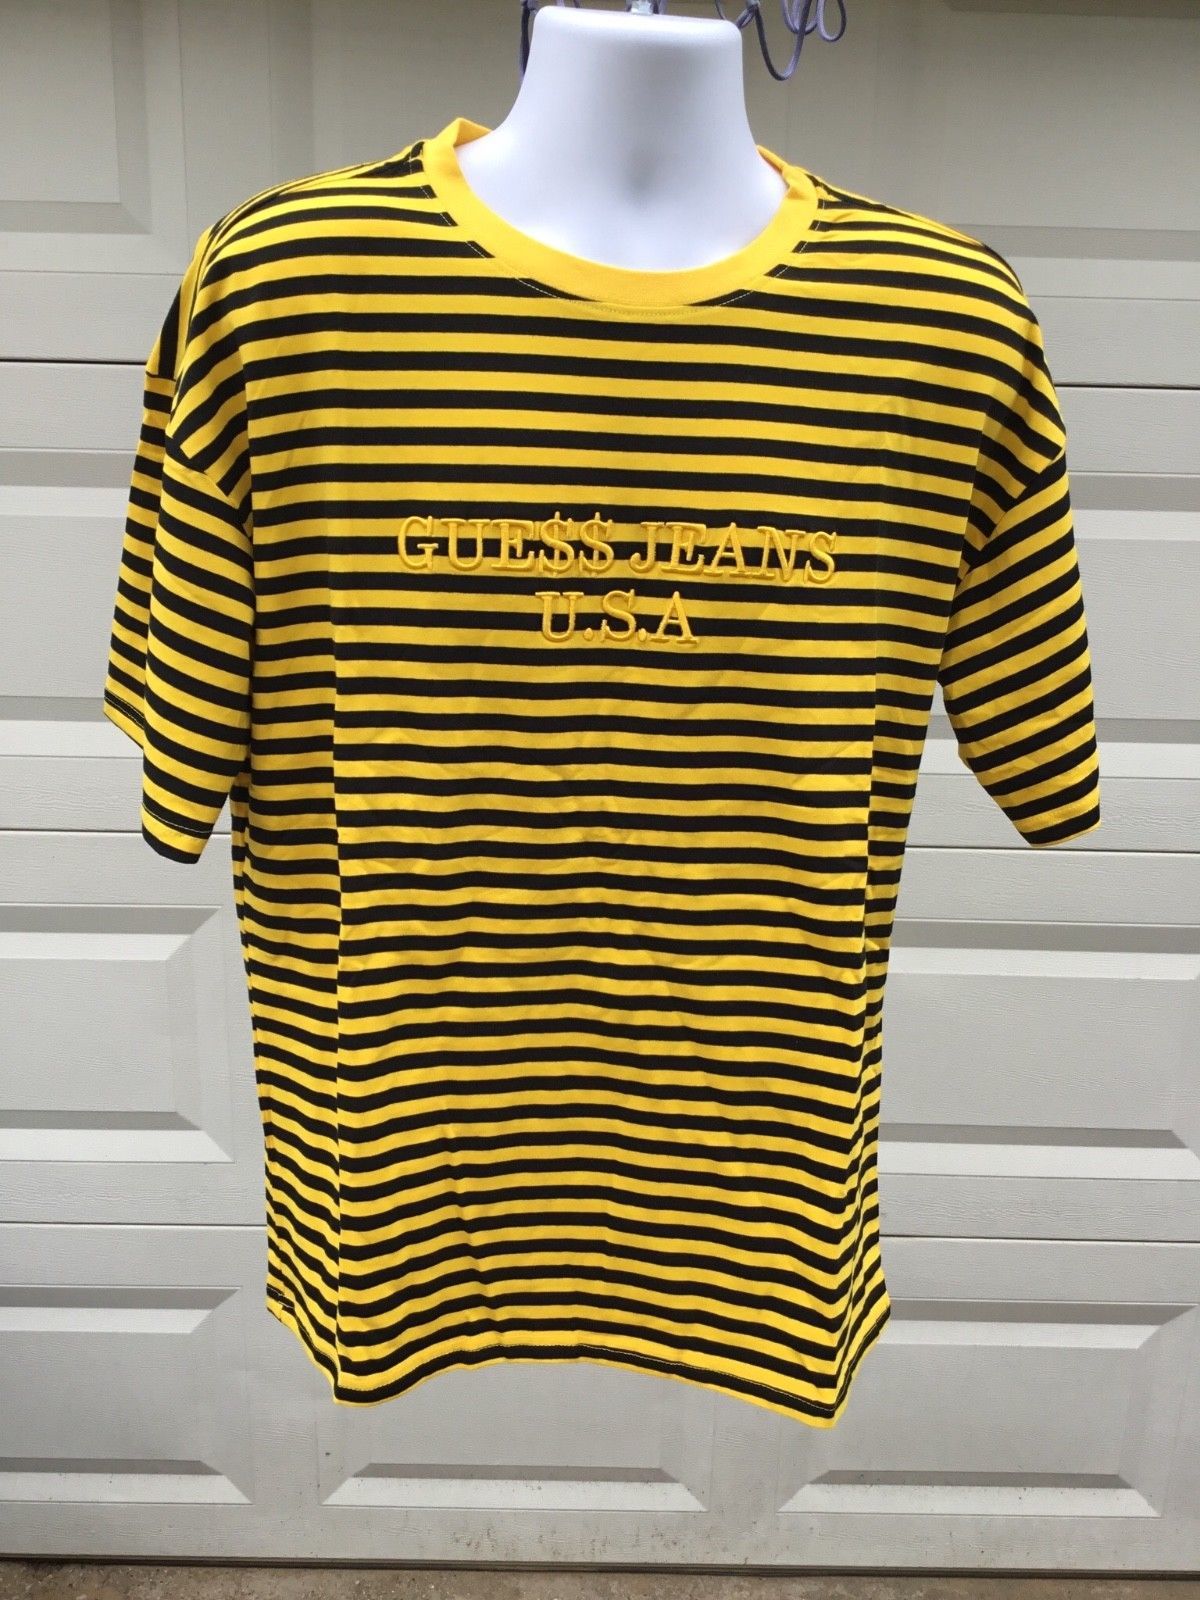 Guess USA Black and Yellow striped T shirt men’s XL NWT - T-Shirts